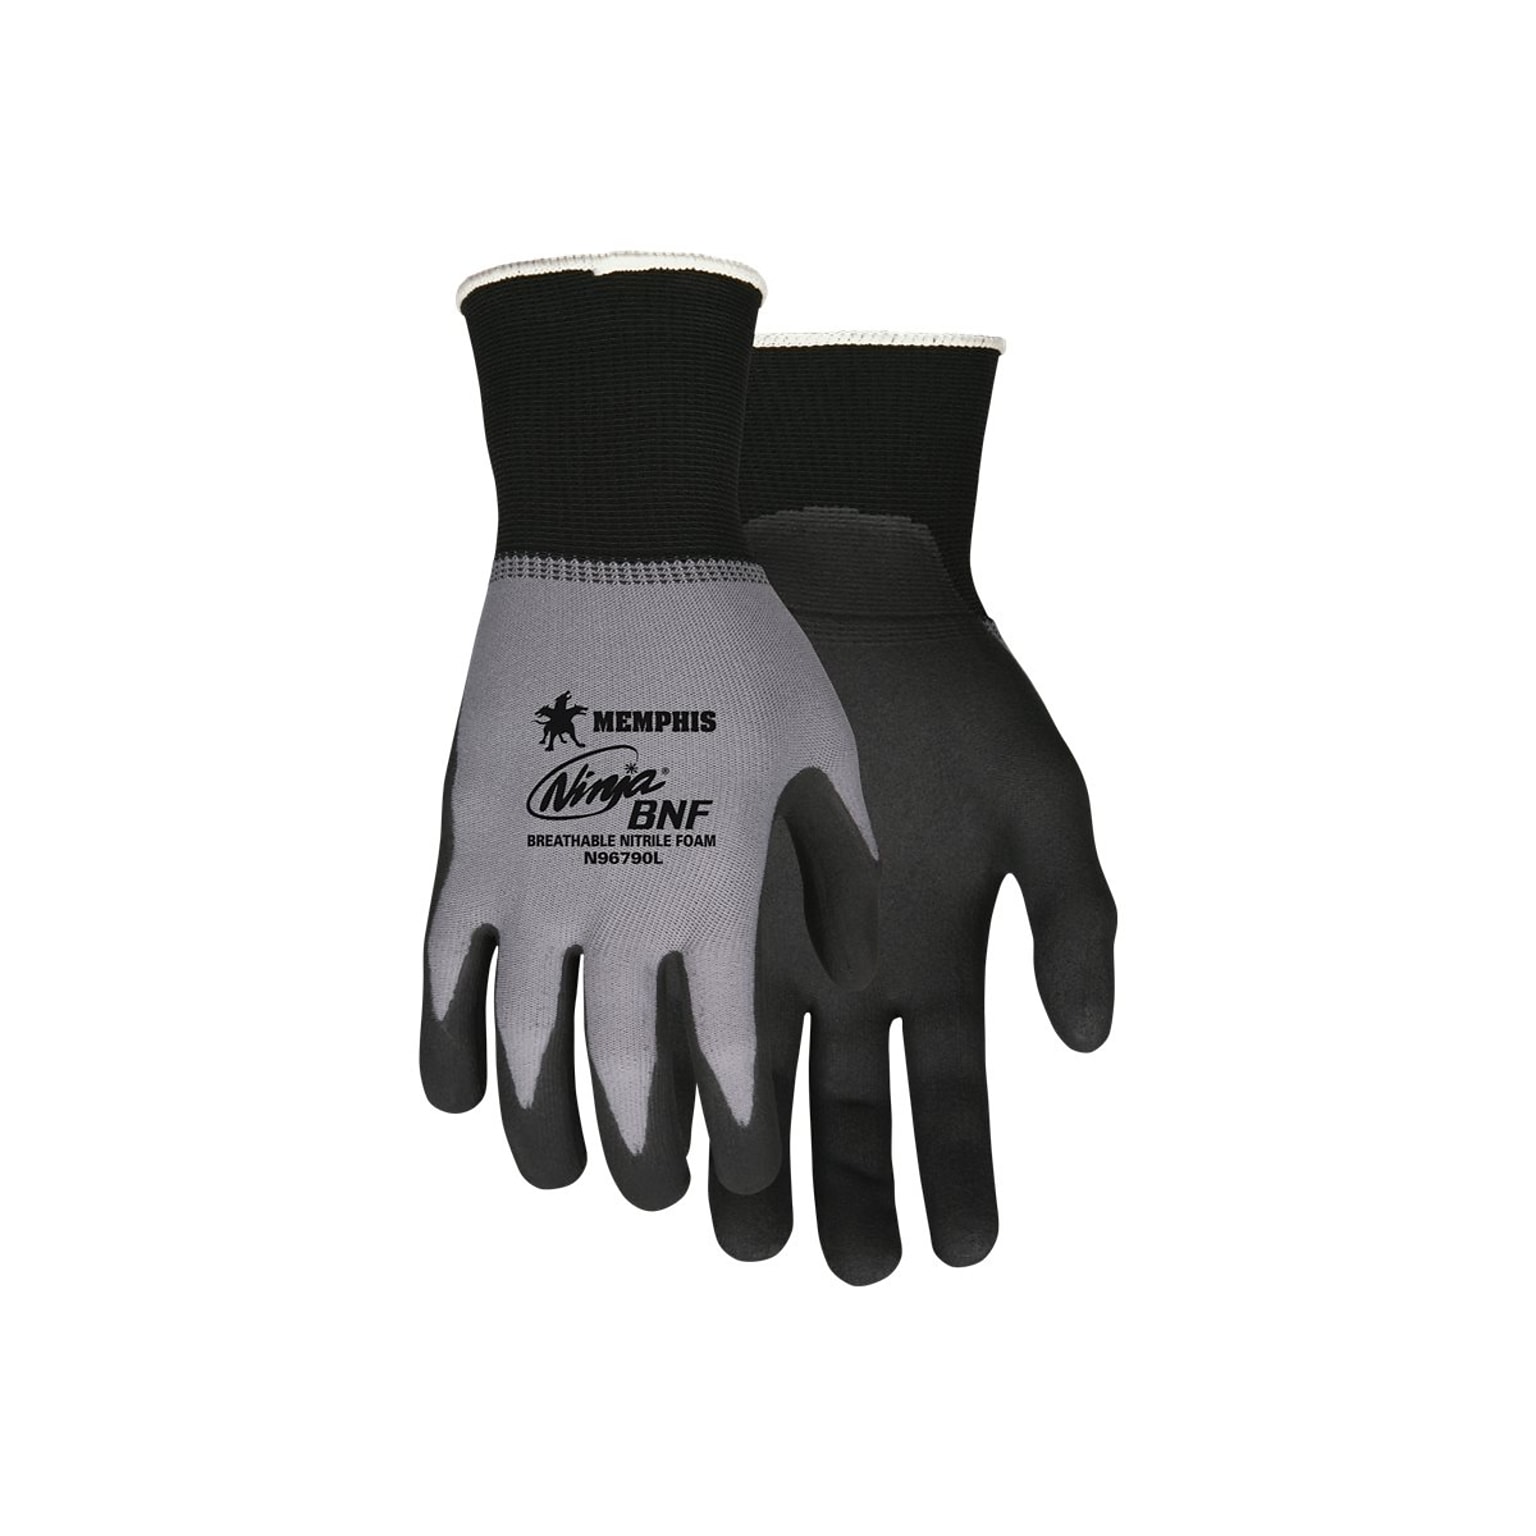 Memphis Glove Ninja Nitrile Gloves, Gray/Black, 12 Pairs/Pack (N96790M)